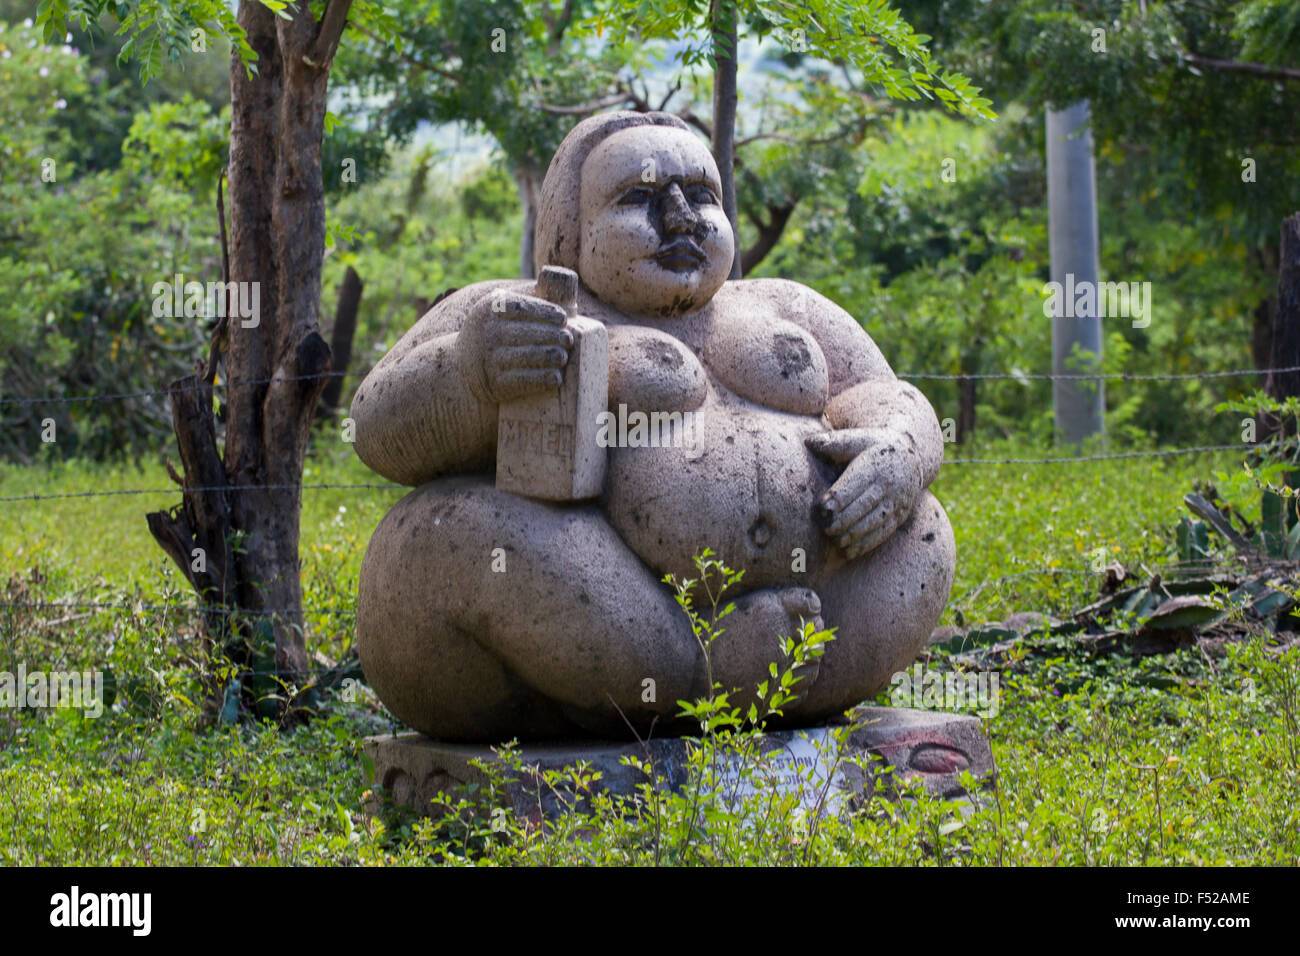 Stone sculpture representing a fat woman placed on 'la ruta del cafe' (the coffee route') in the mountains surrounding Esteli Stock Photo